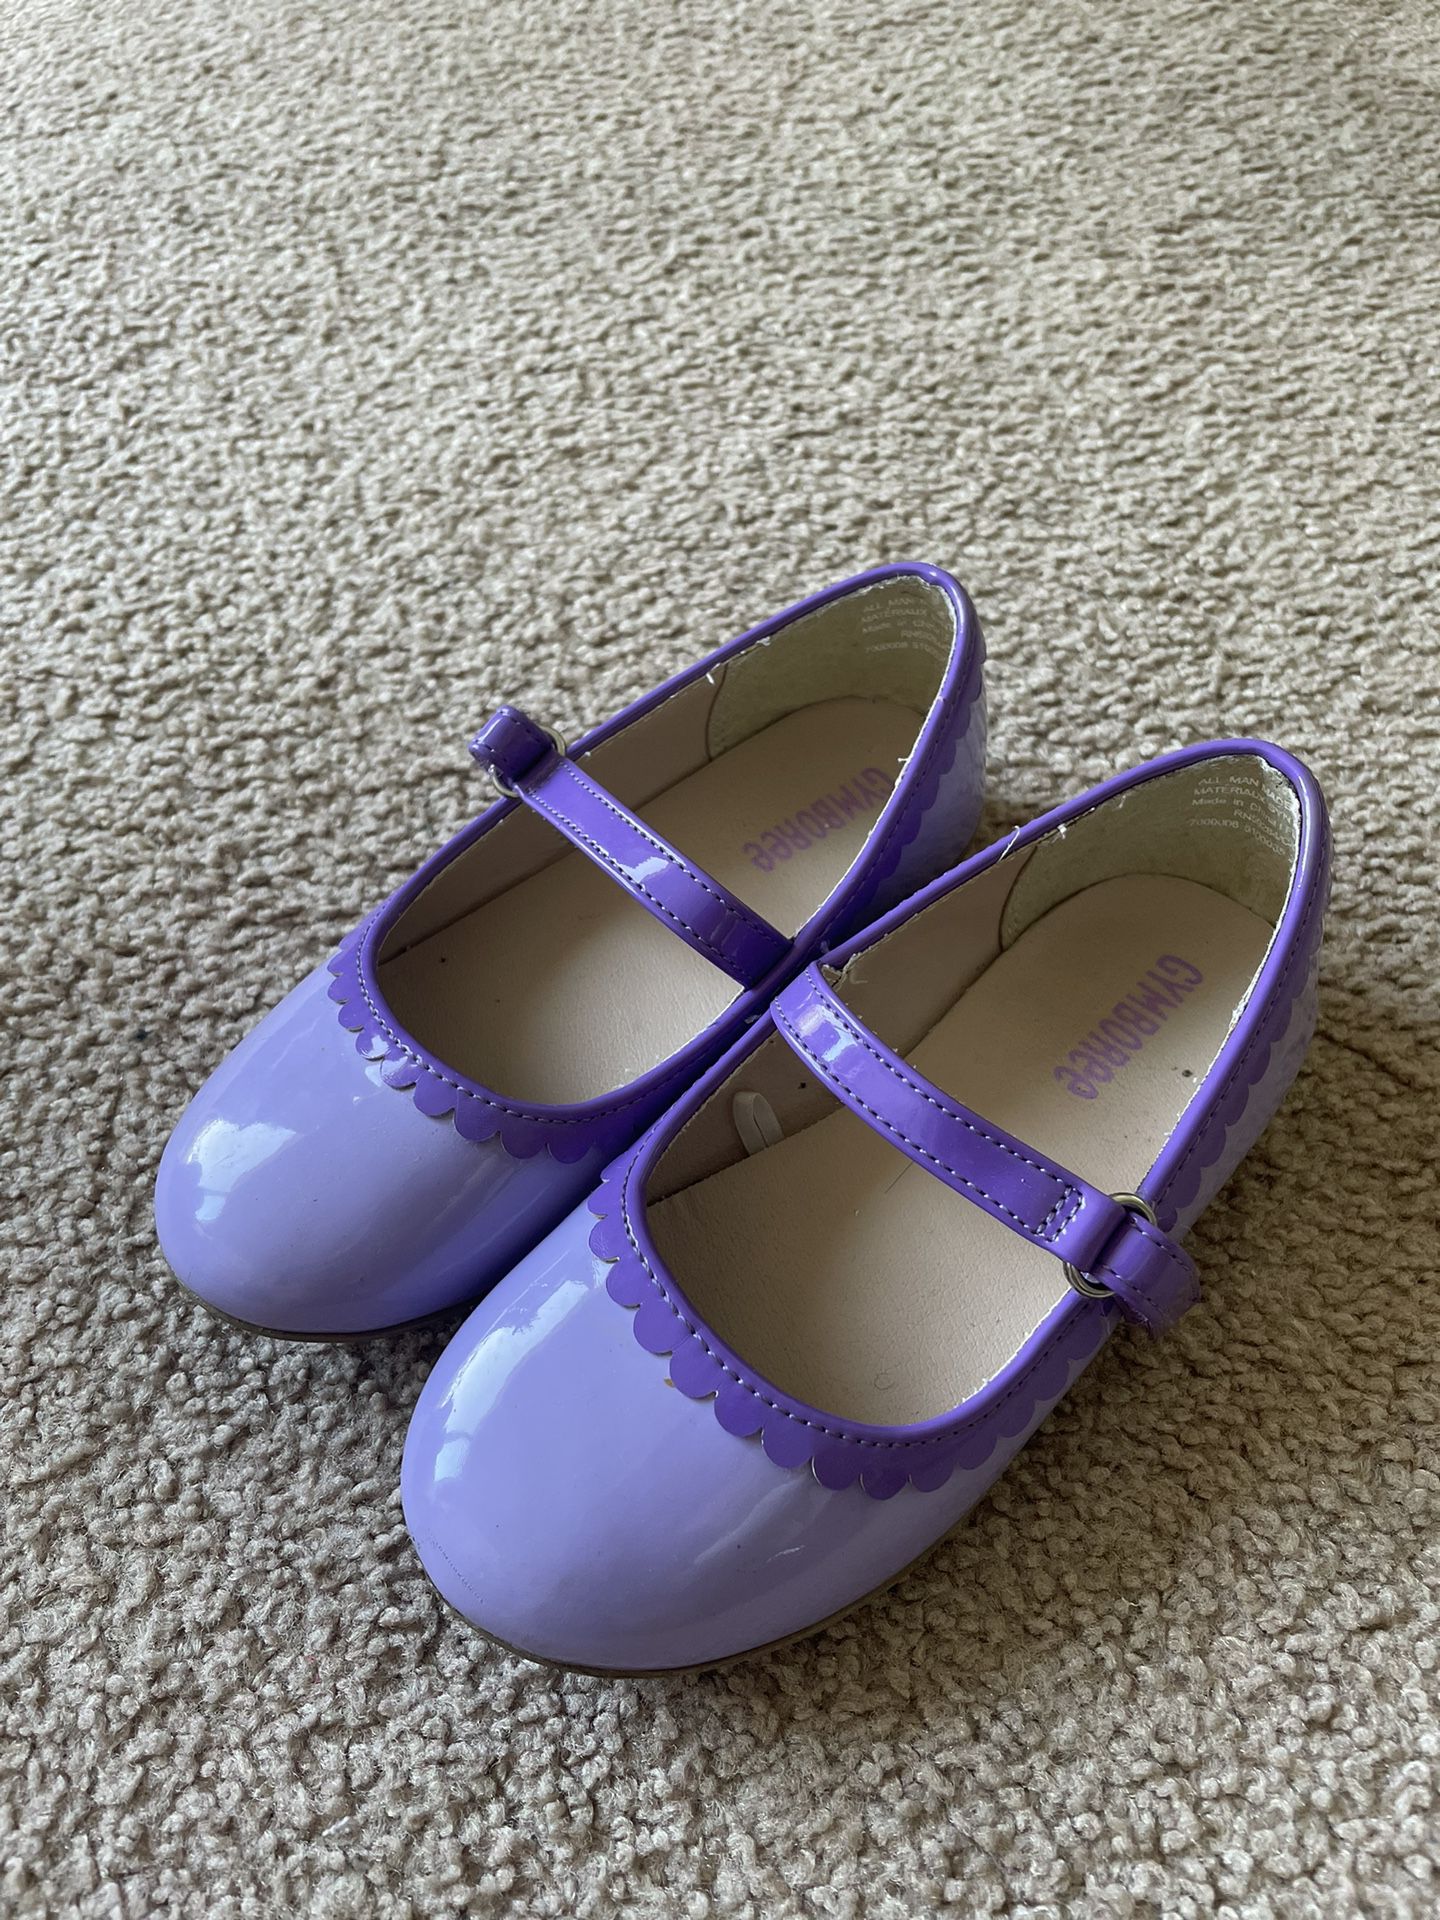 Gymboree Girls Shoes Size 9 Toddler 